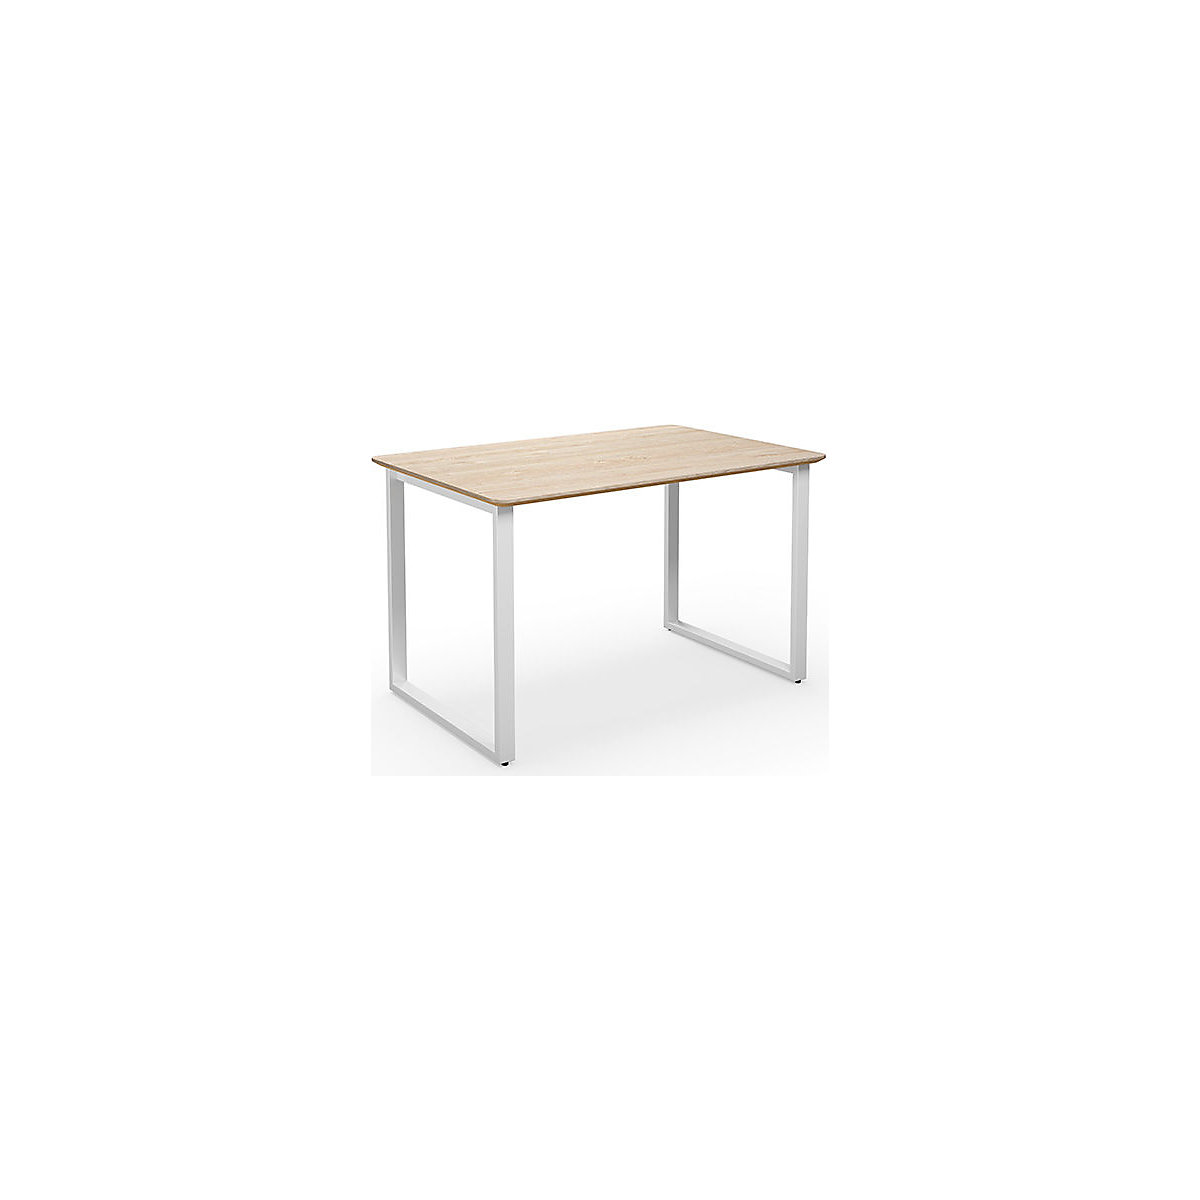 DUO-O Trend multi-purpose desk, straight tabletop, rounded corners, WxD 1200 x 800 mm, oak, white-3